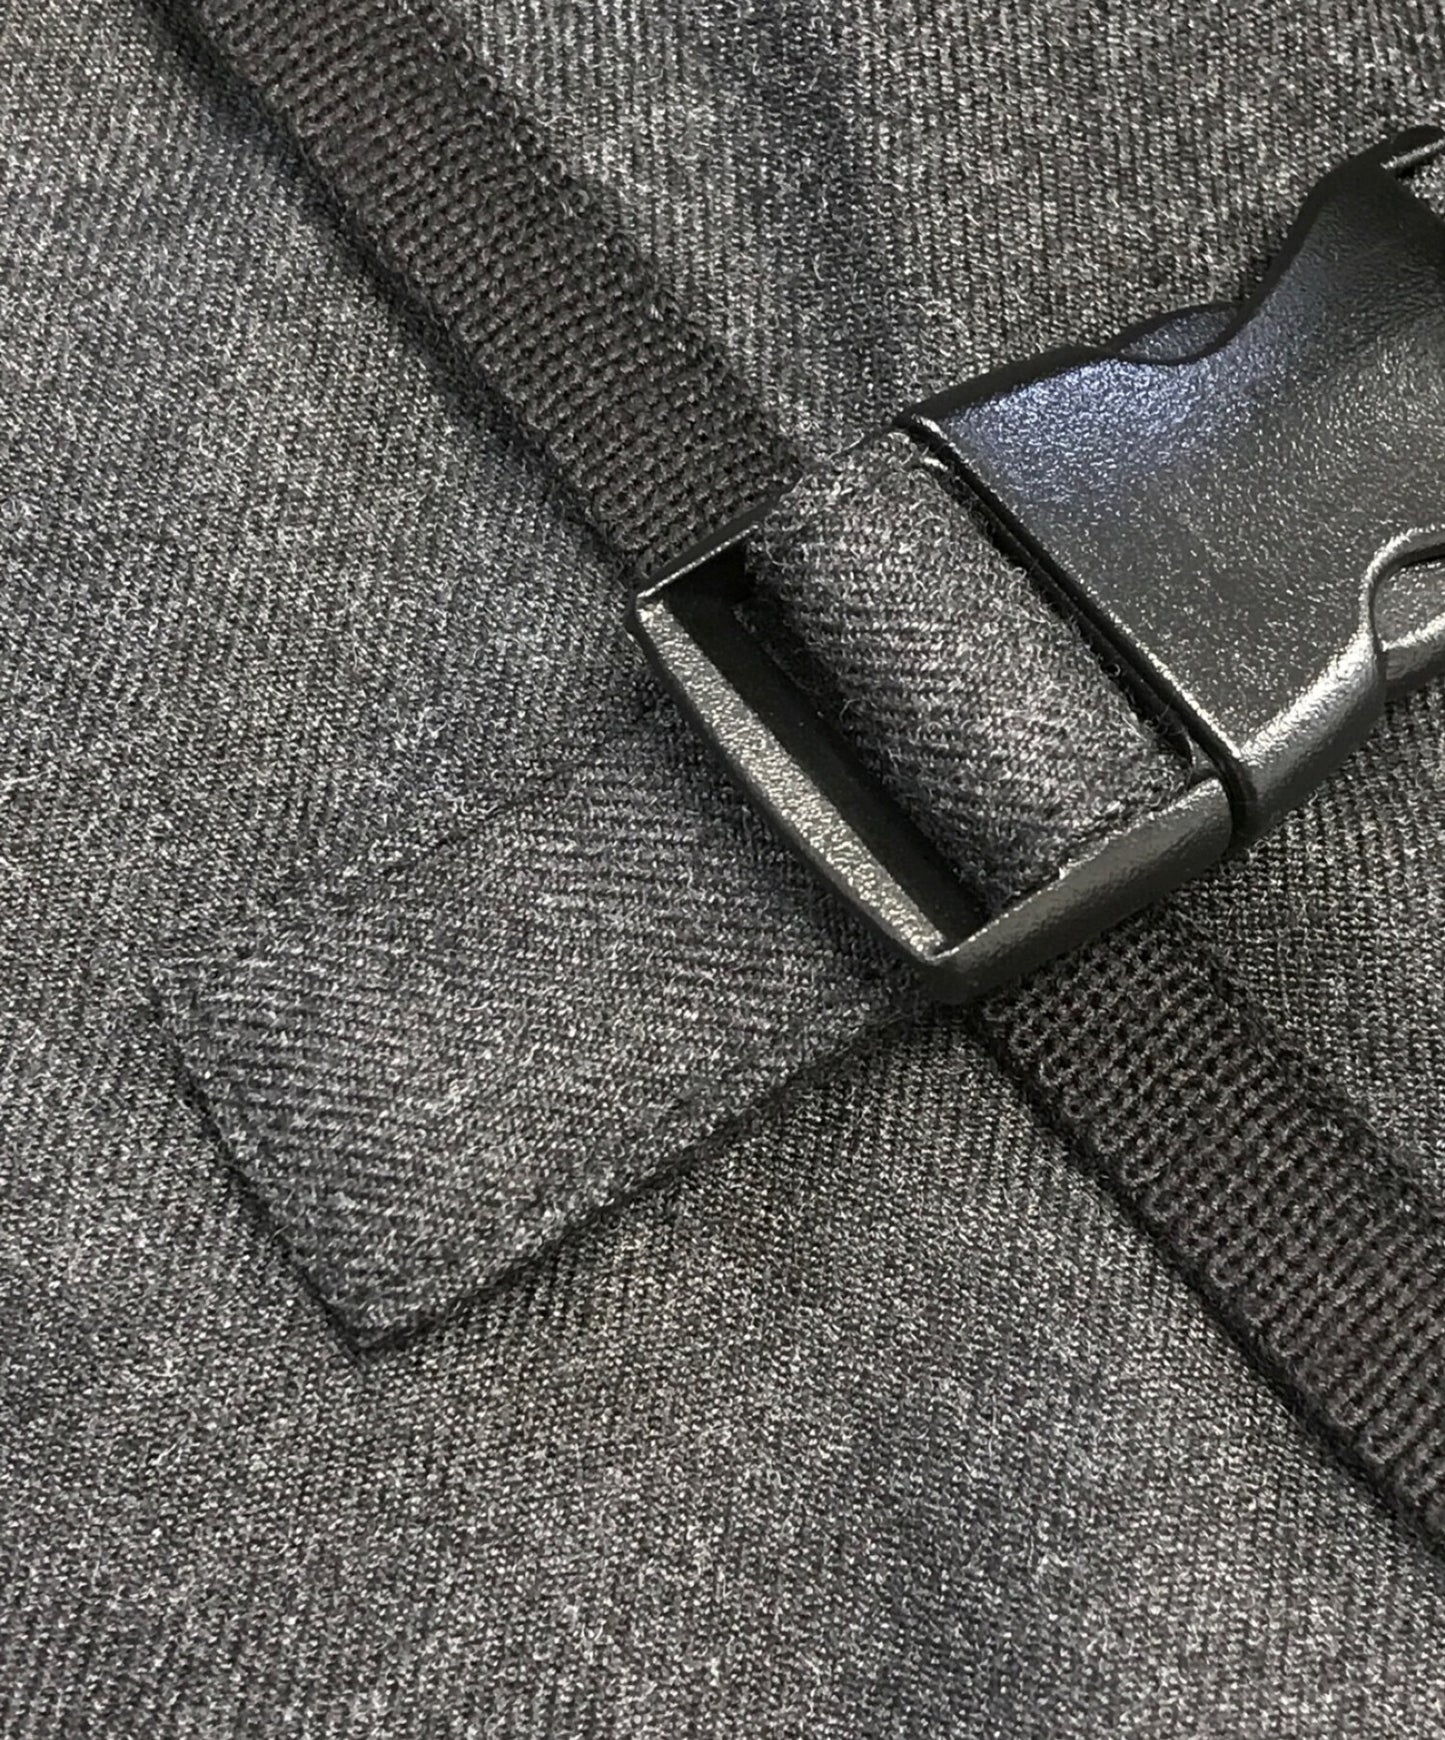 [Pre-owned] COMME des GARCONS Homme Plus Side Adjuster Half Pants PF-A020